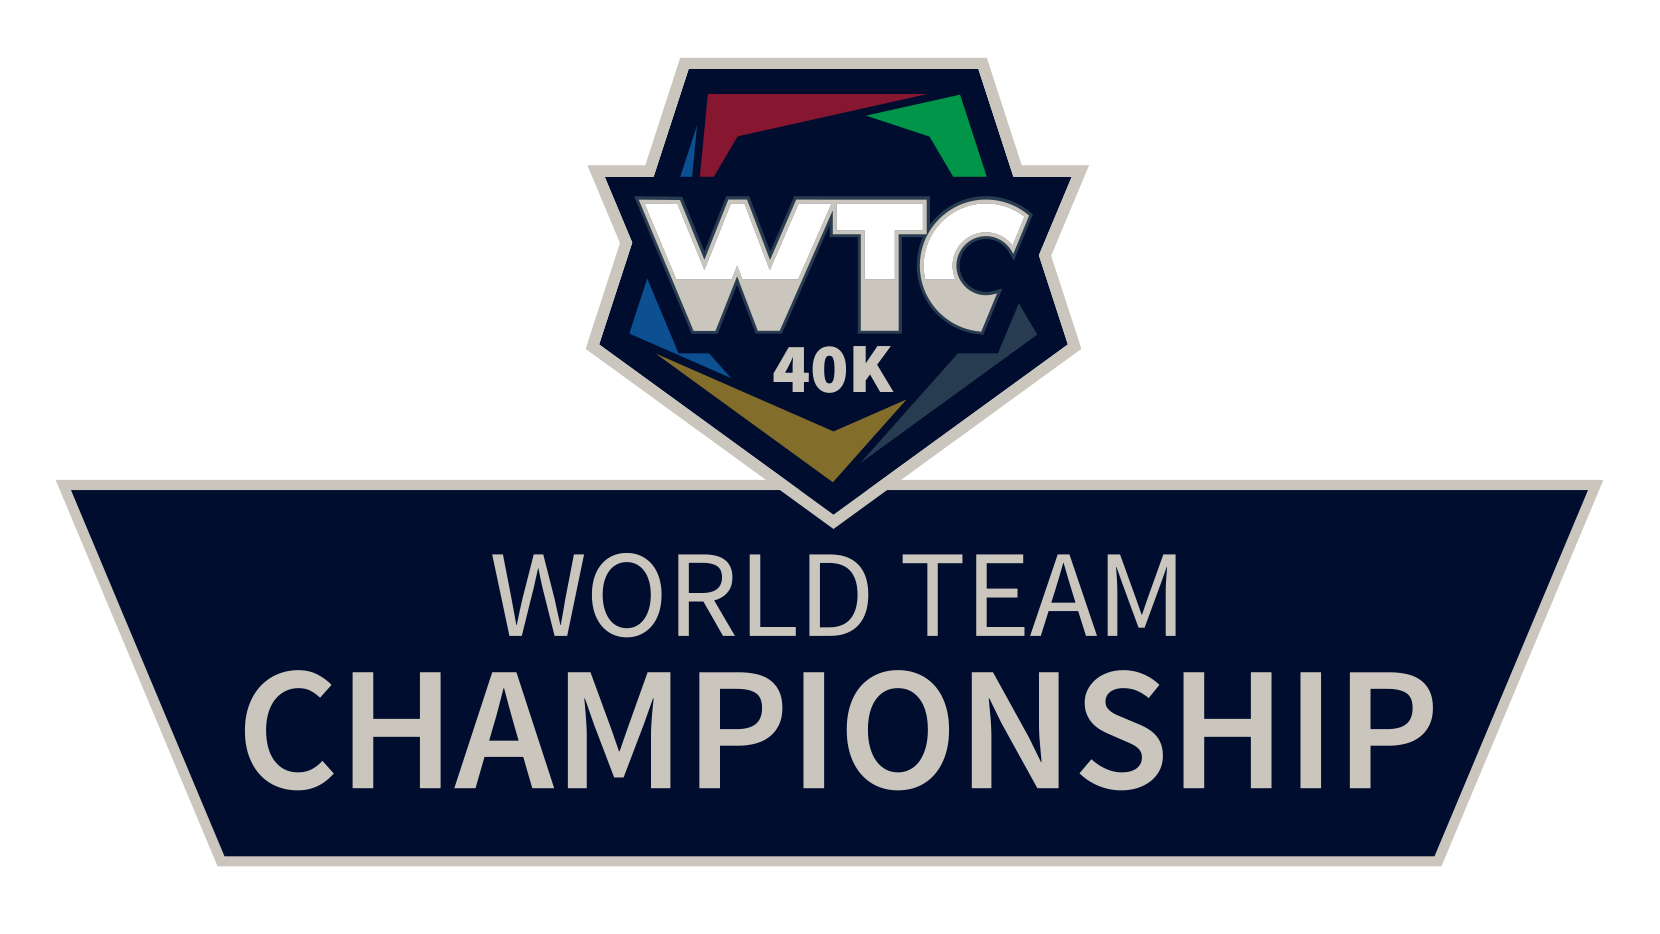 World team championship